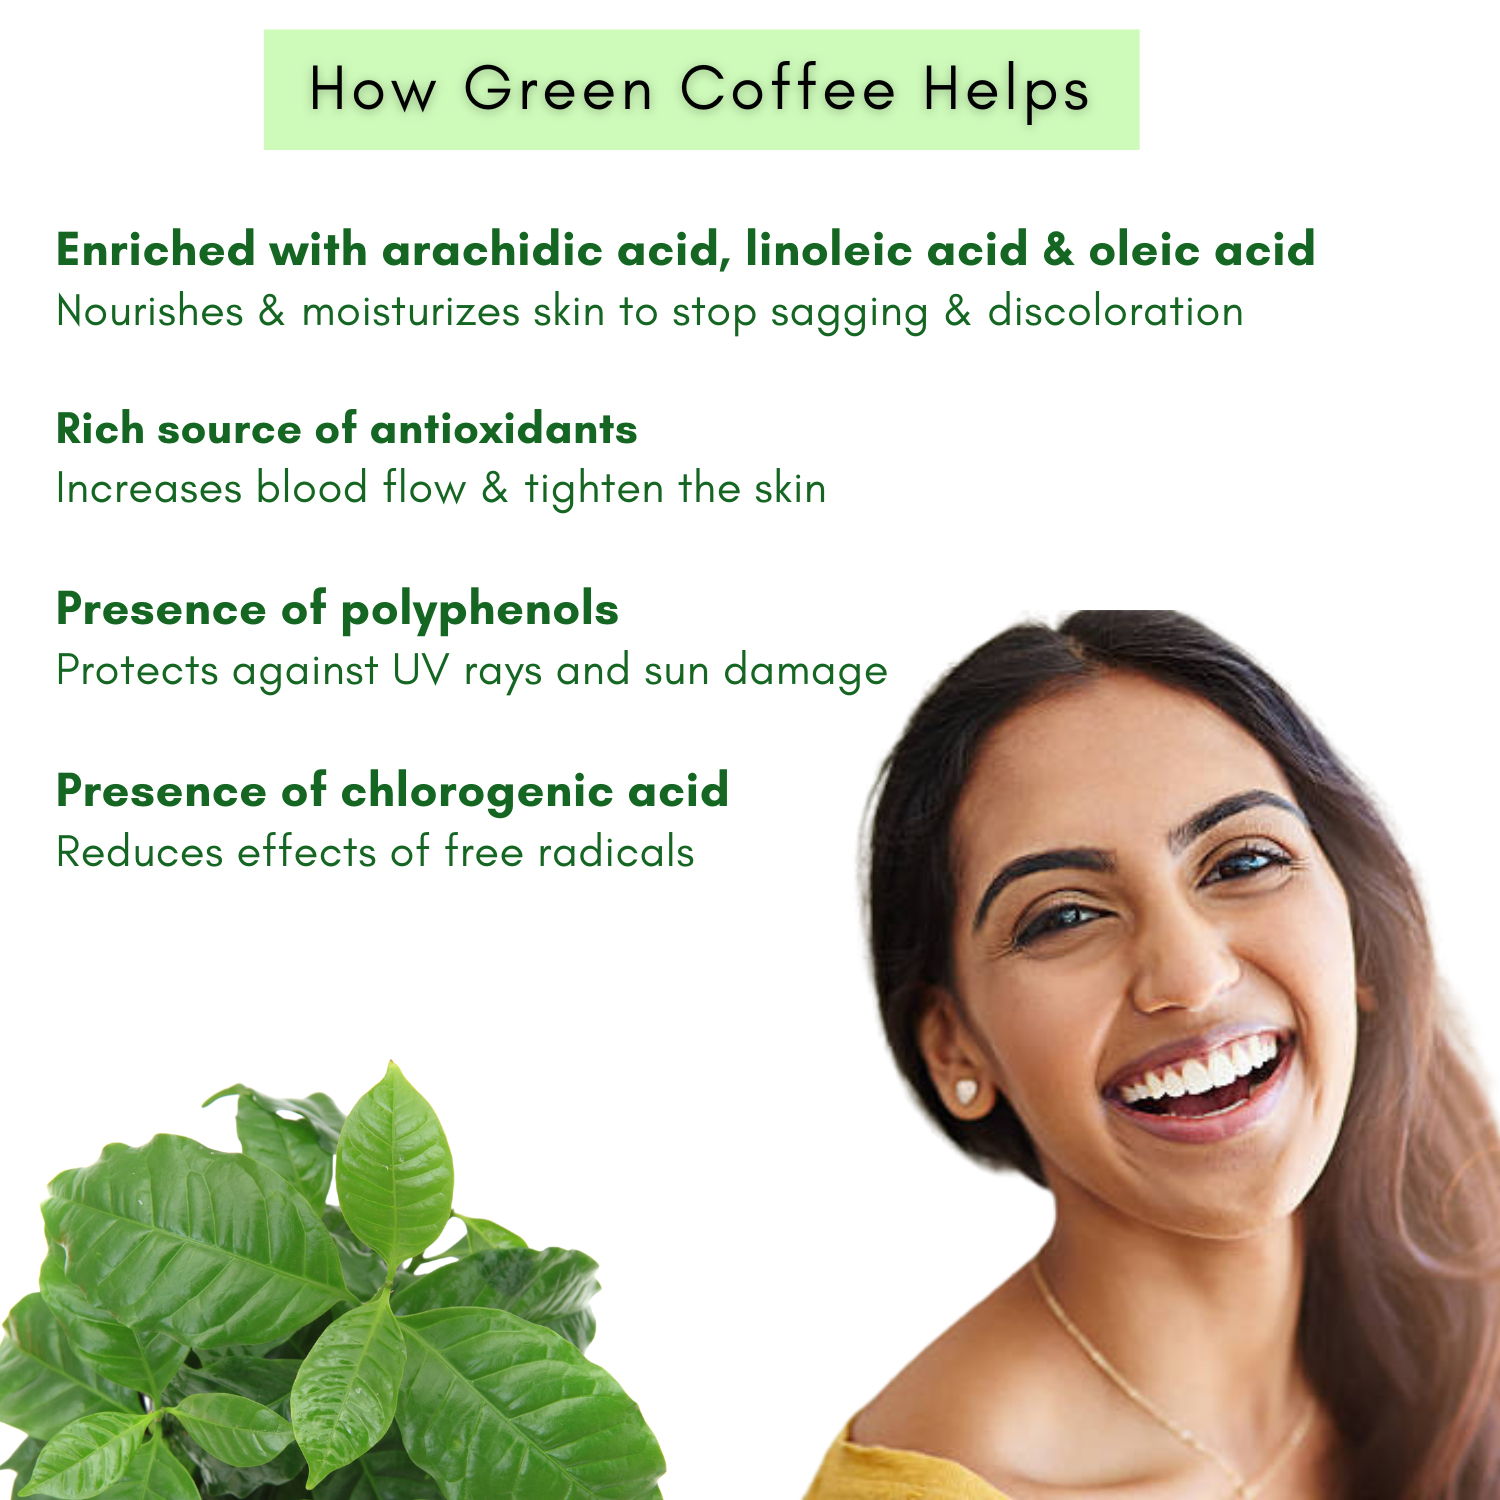 Green coffee benefits